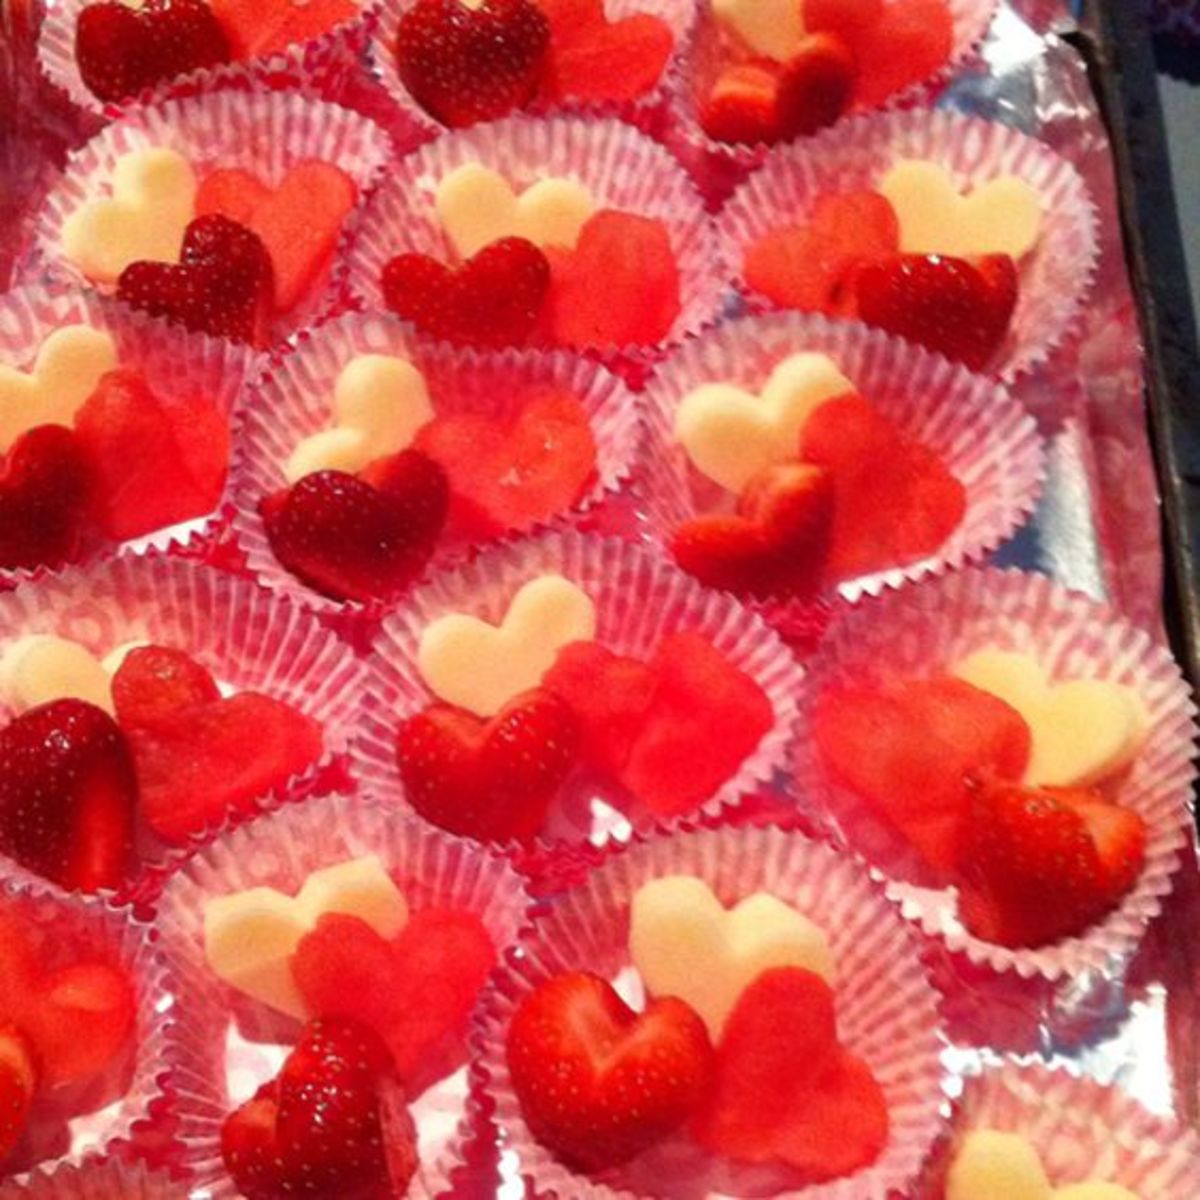 Heart shaped mozzarella, watermelon and strawberries.